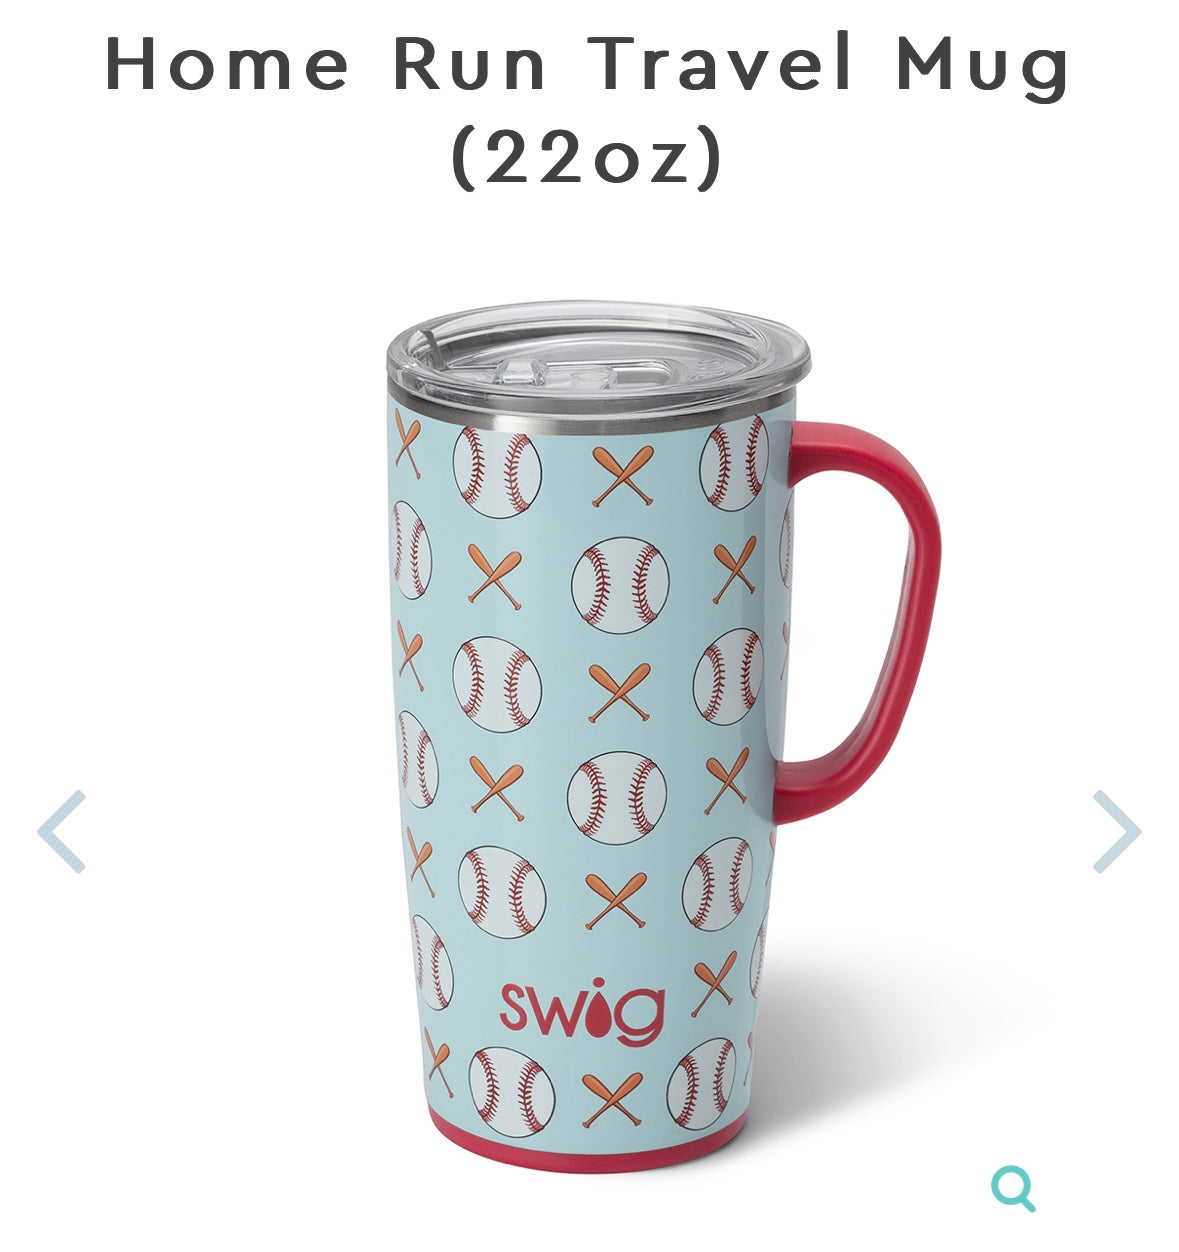 76 Swig travel mug 22oz